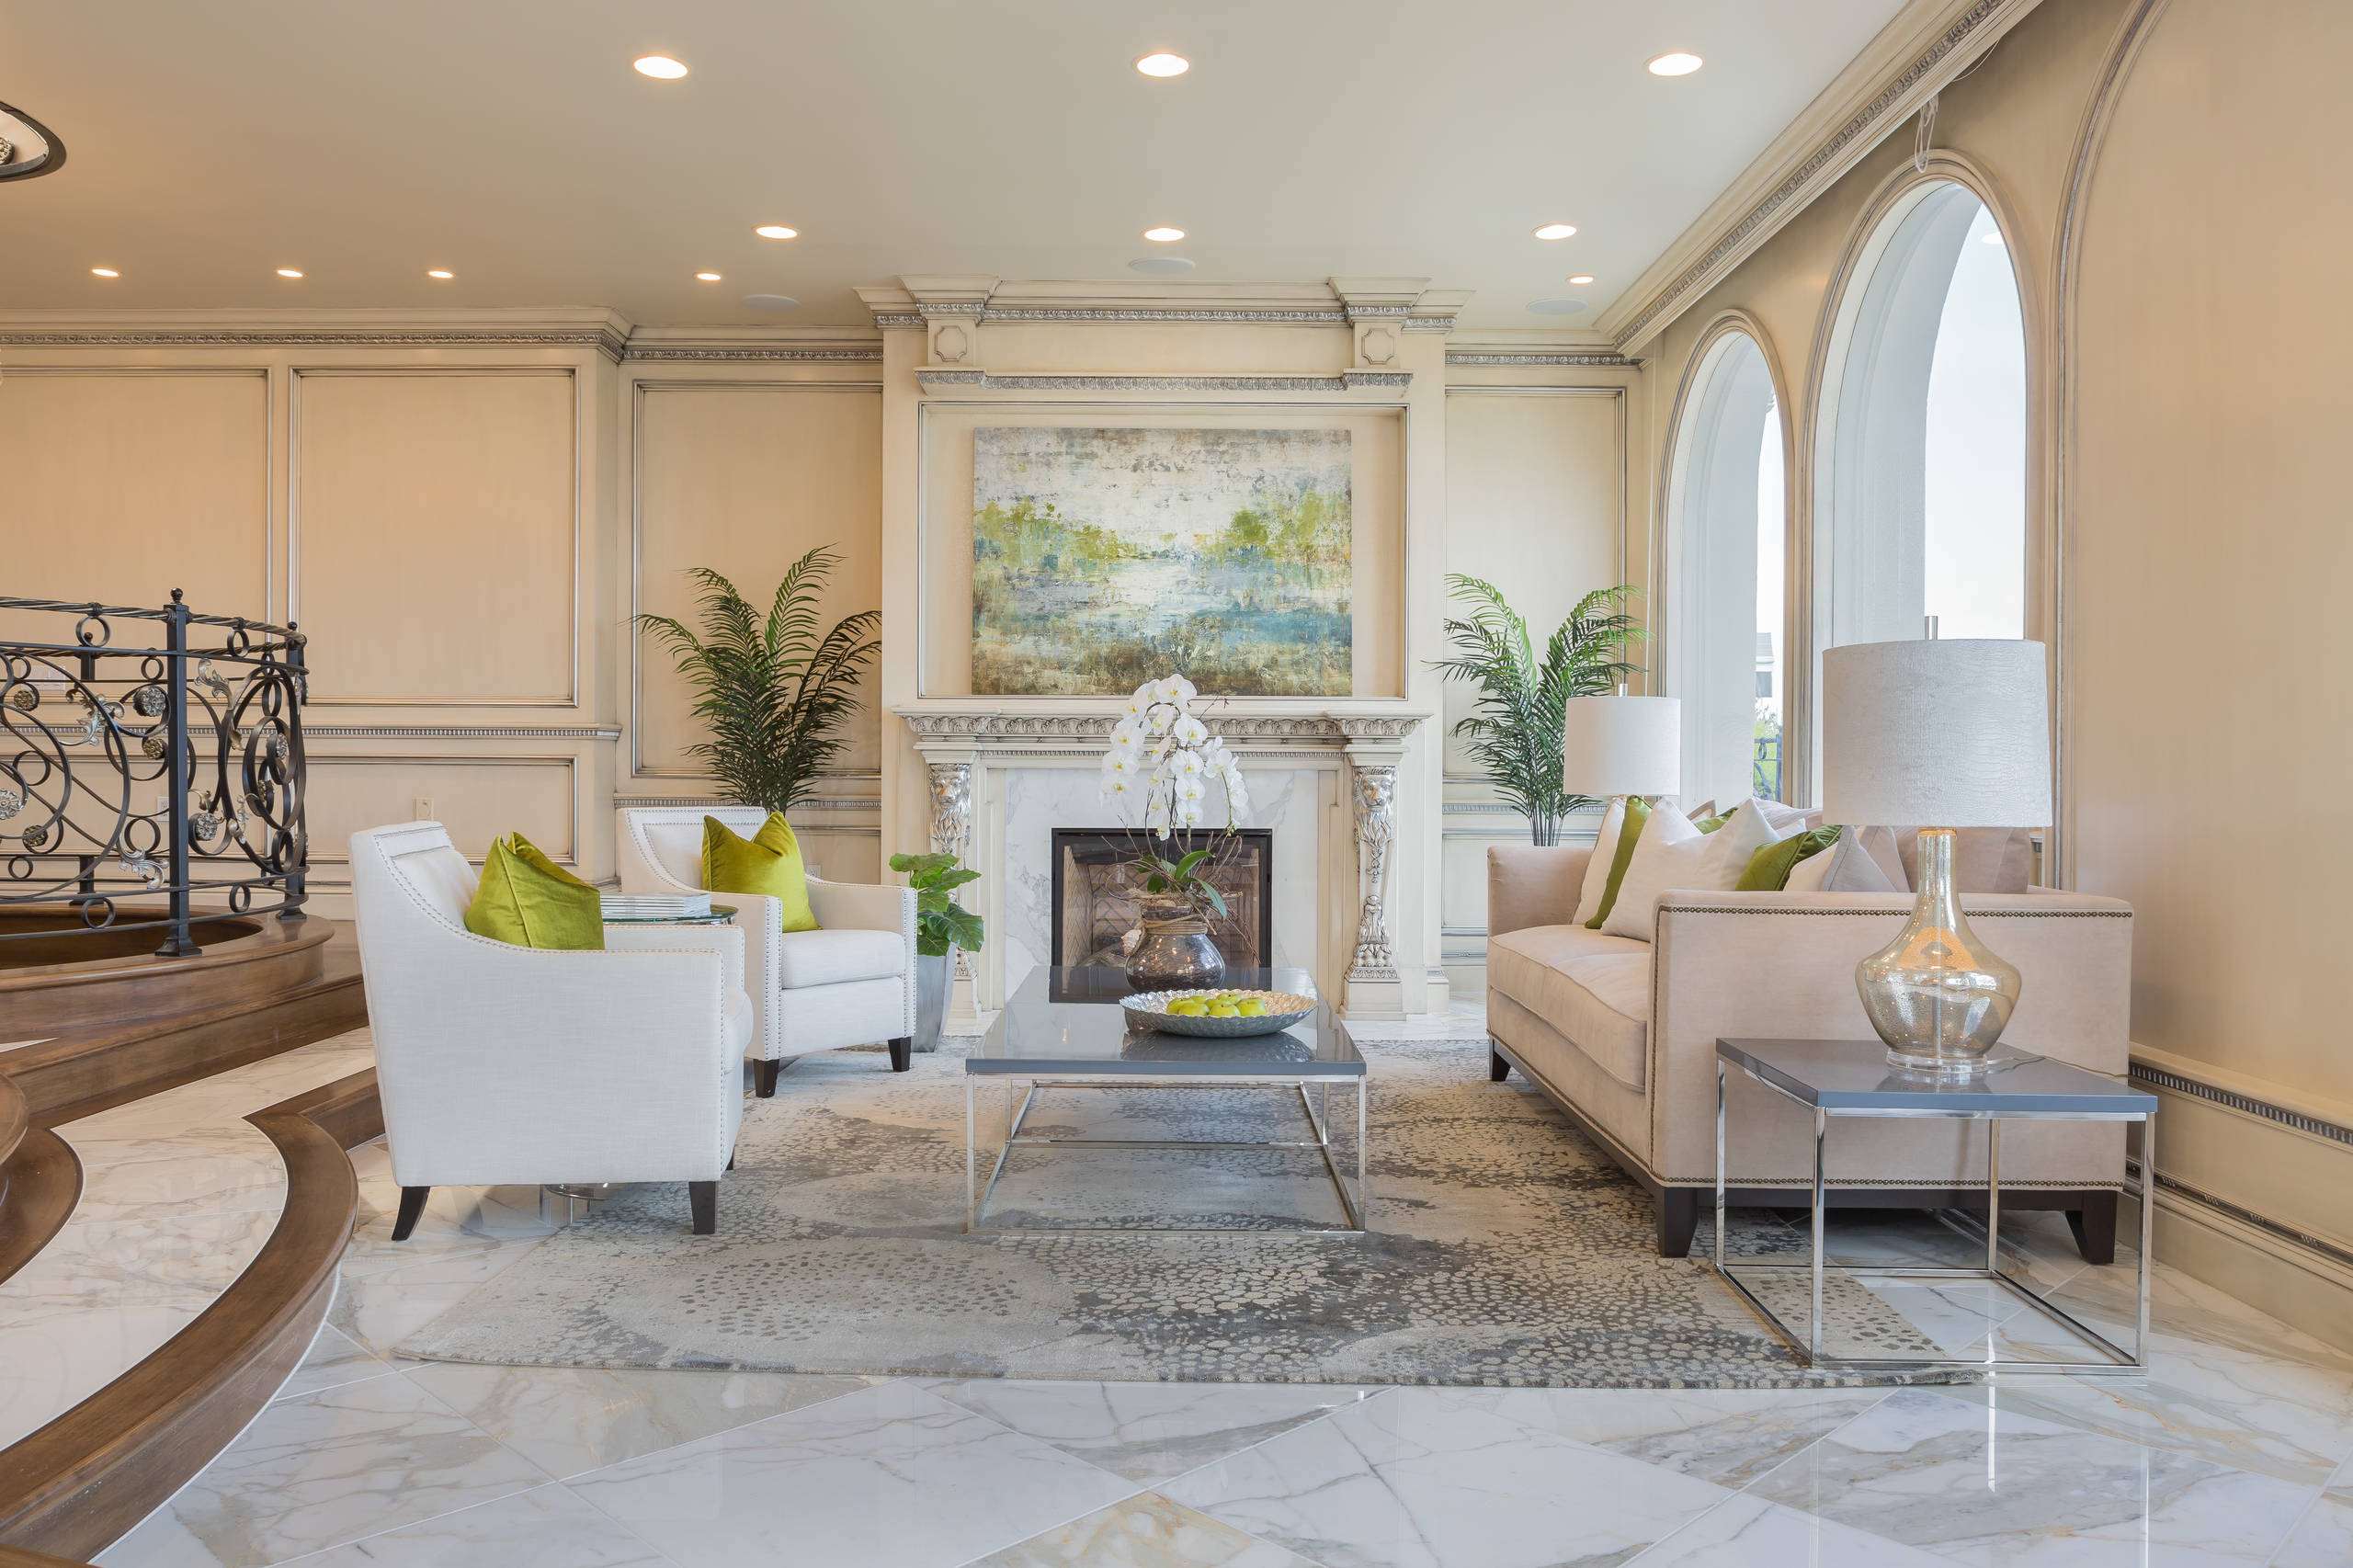 75 Marble Floor Living Room Ideas You